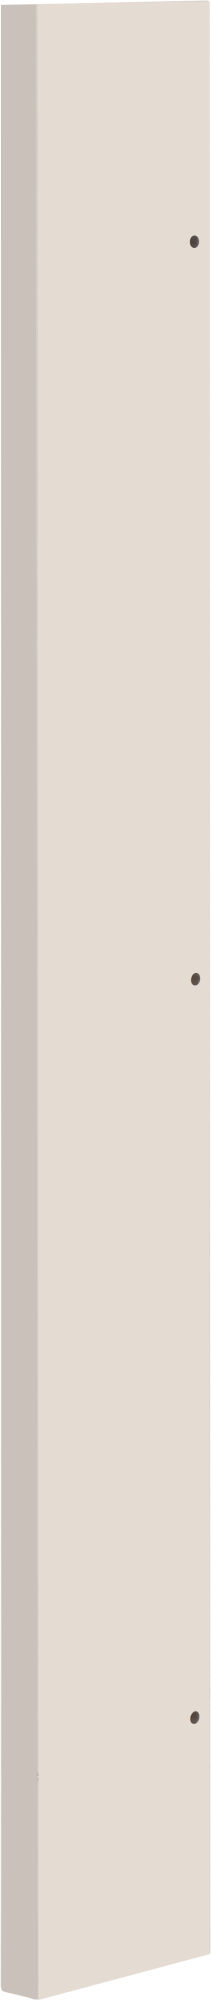 Regleta angular delinia id mikonos marrón 9x76,8 cm